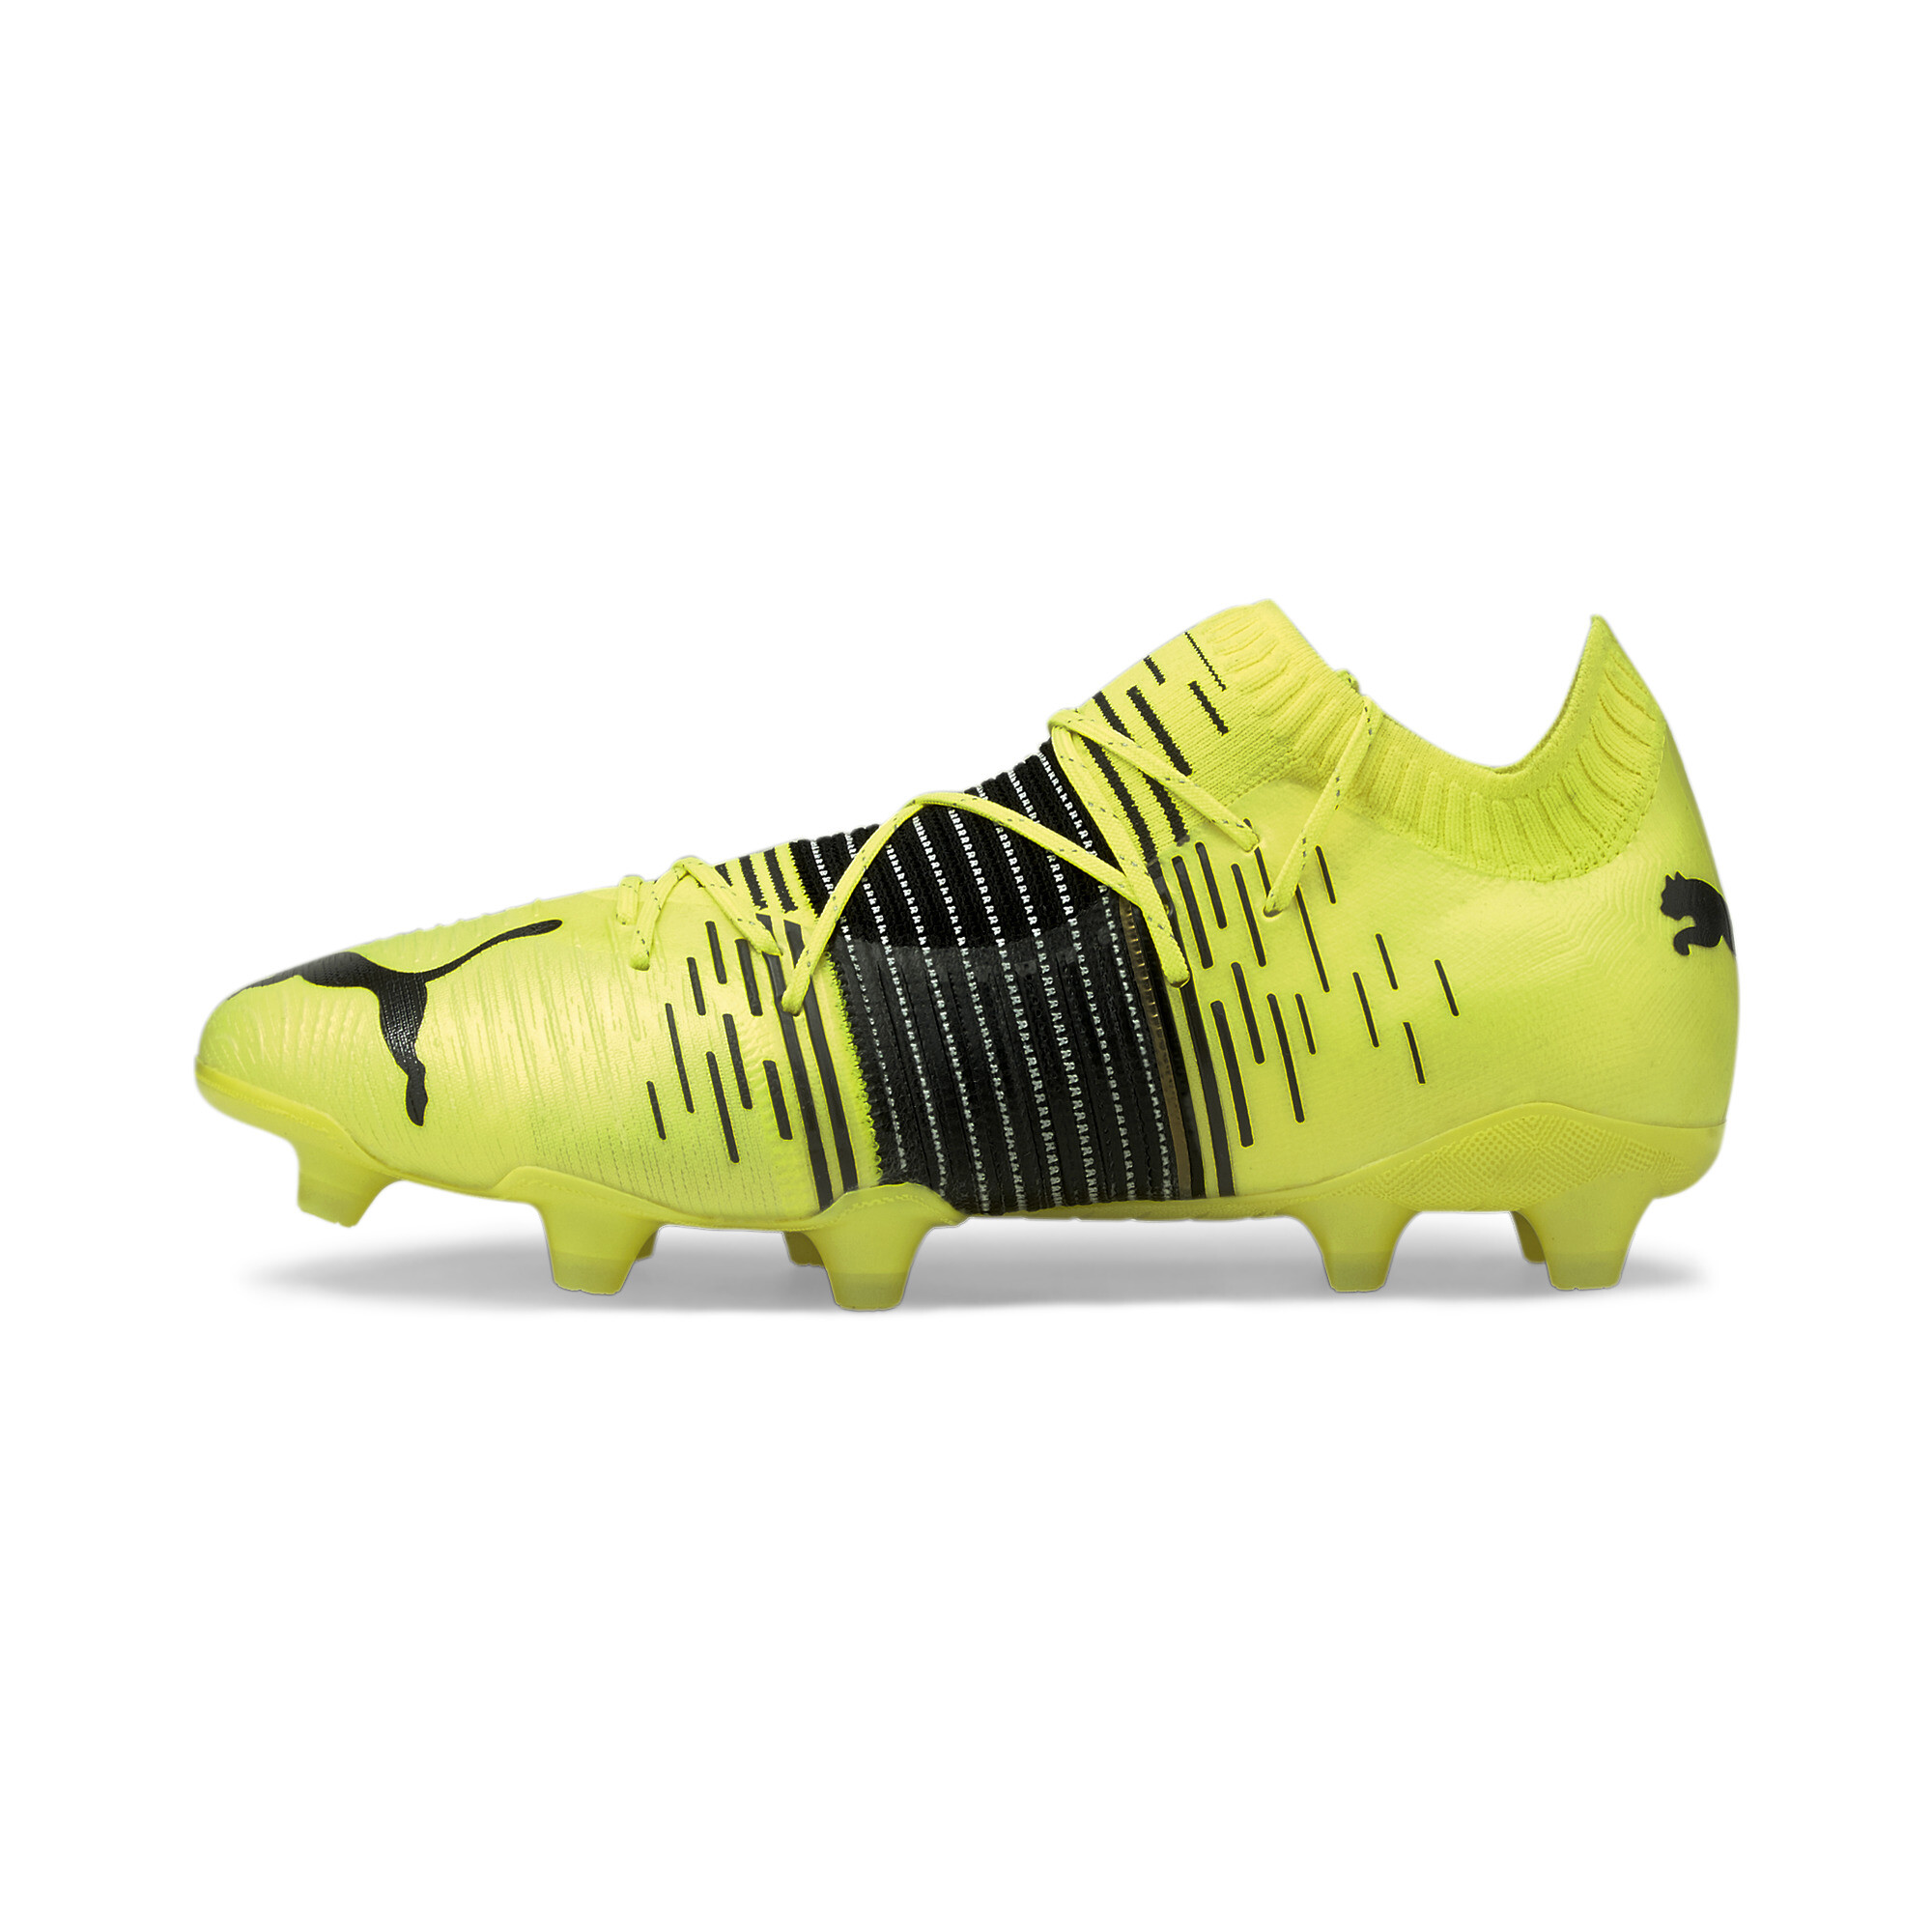 Future Z 1 1 Fg Ag Men S Football Boots Yellow Puma